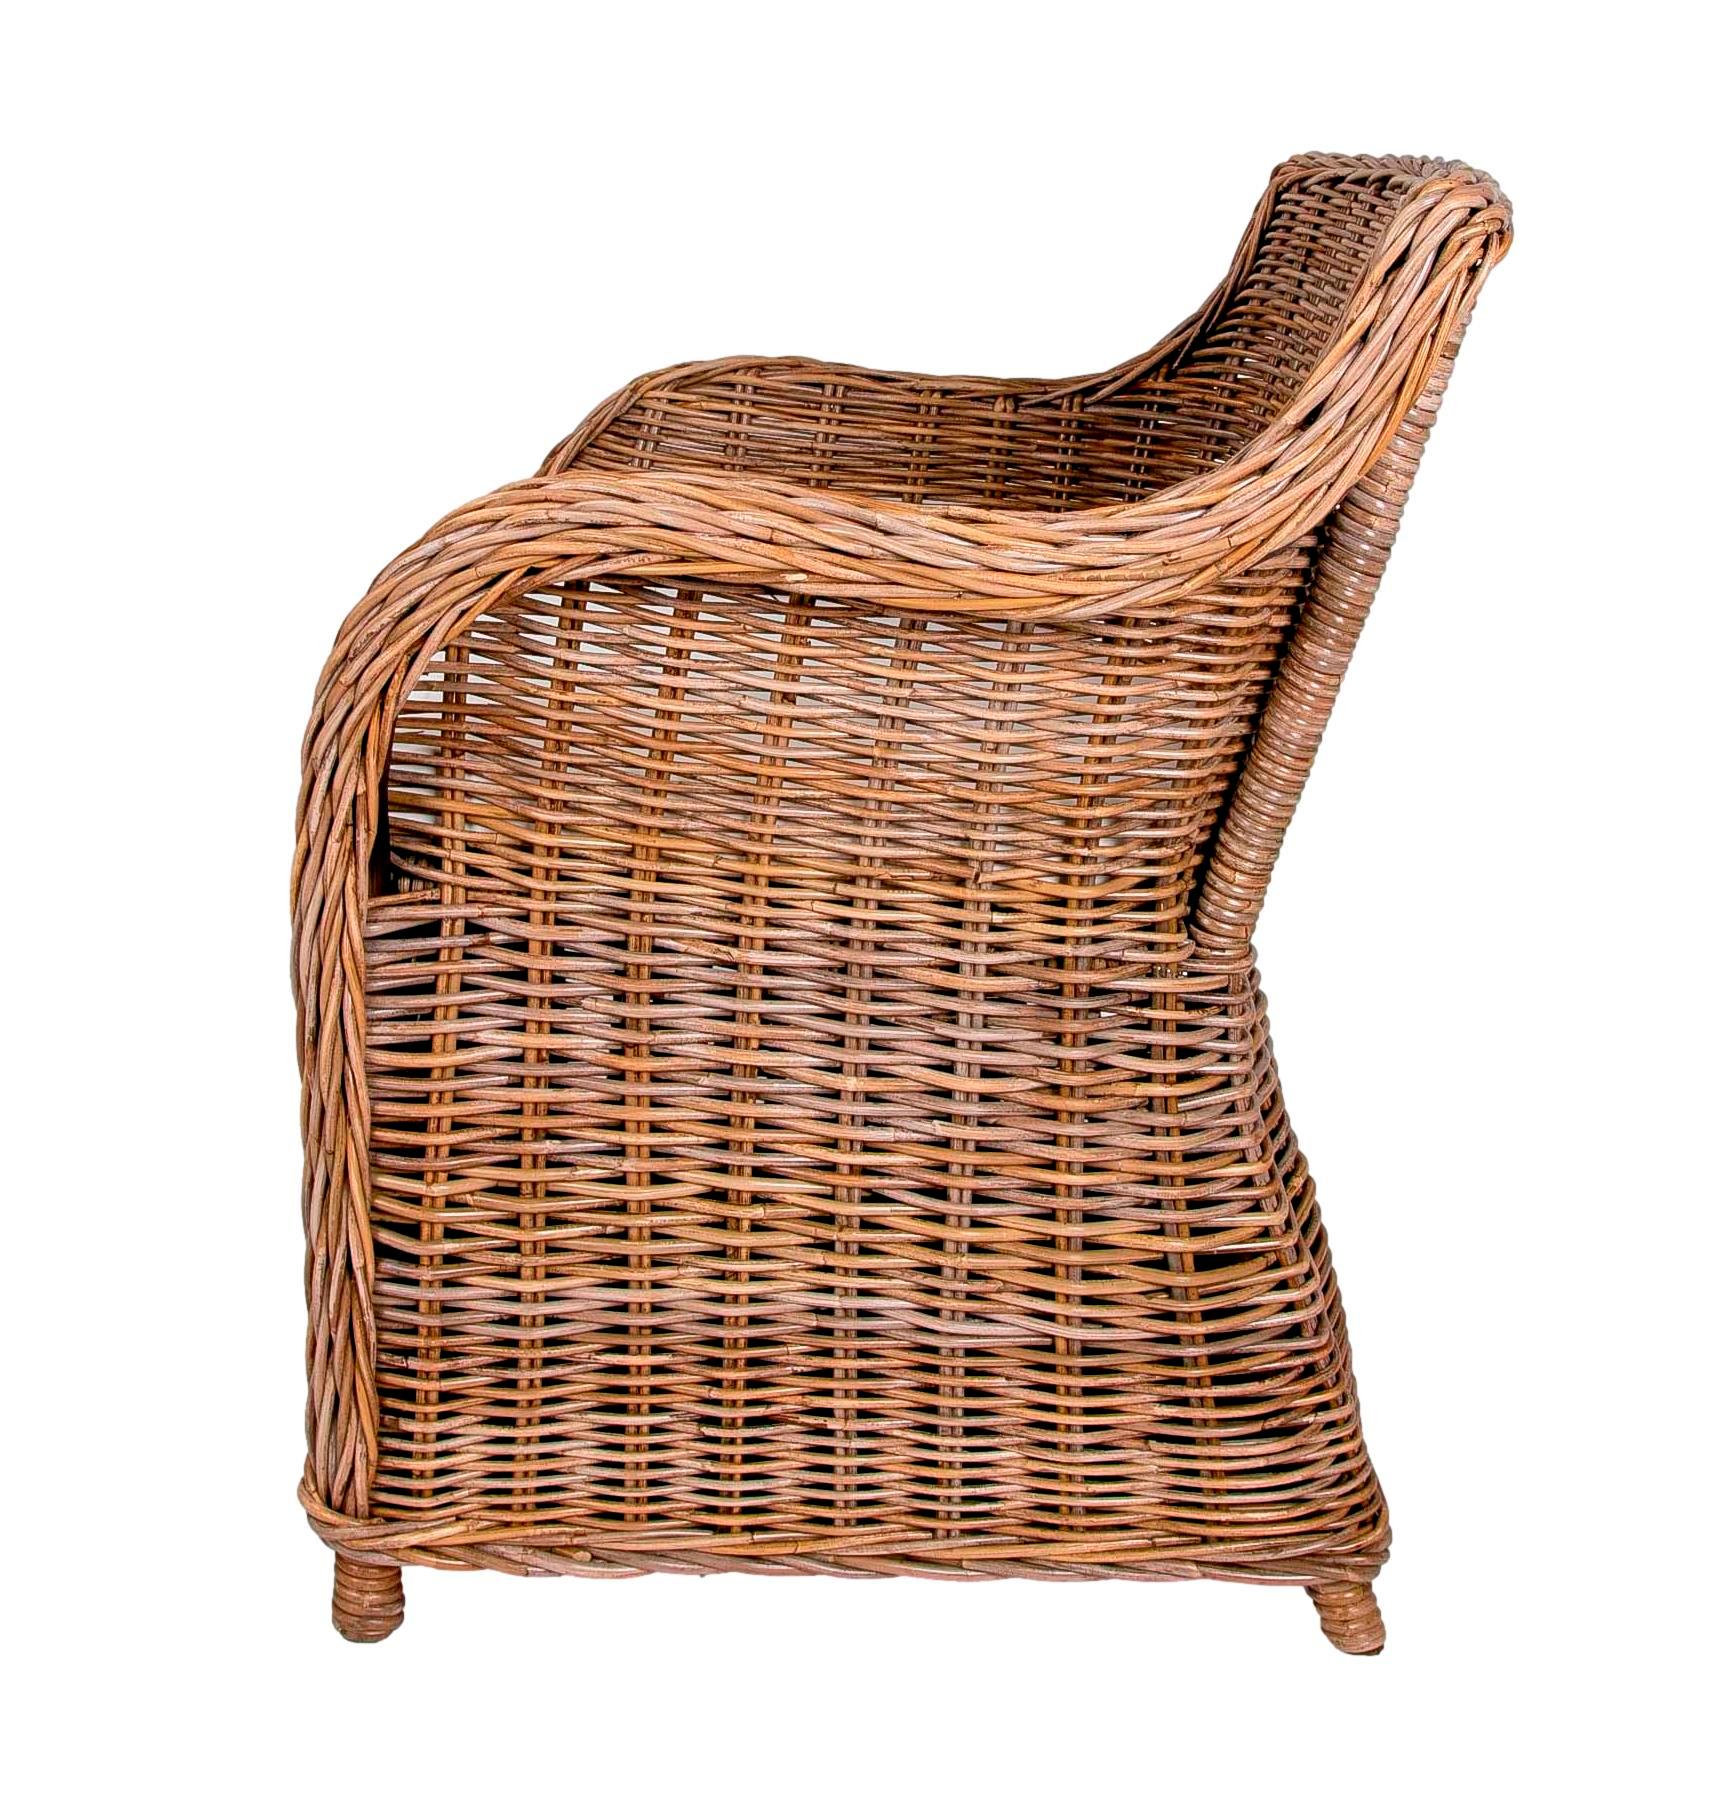  Rattan Garden Chair with Cushion in Greyish Tone For Sale 5